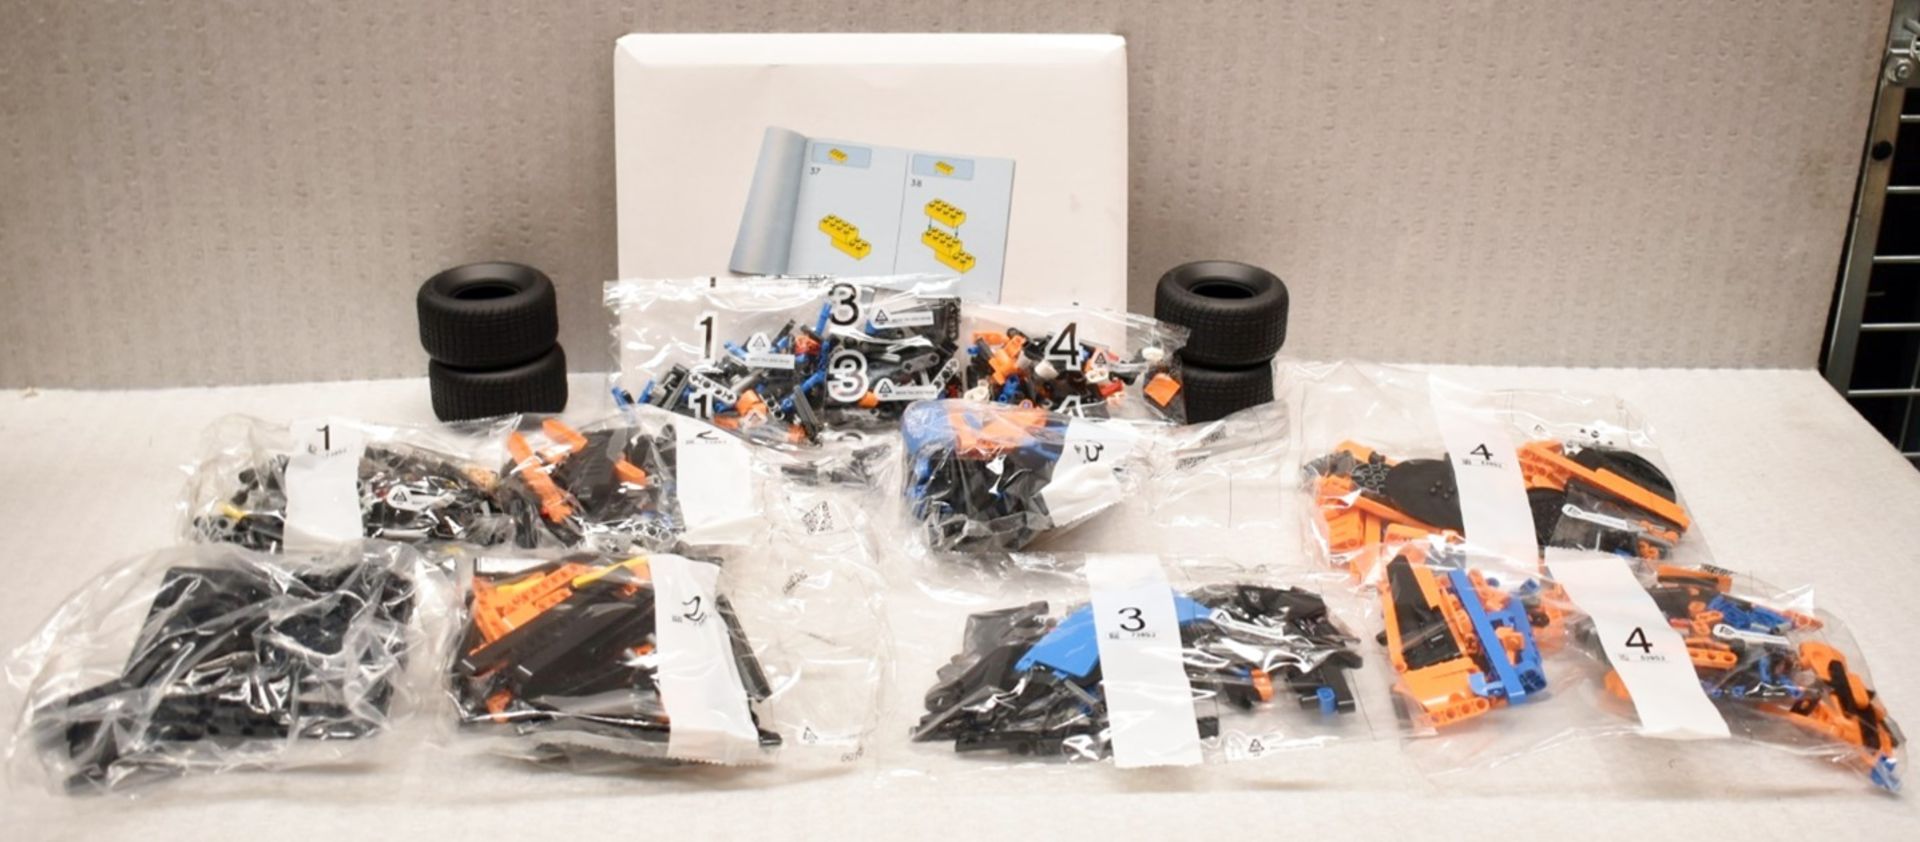 1 x LEGO Technic McLaren Formula 1 Race Car Toy (42141) - Original Price £169.00 - Image 3 of 7